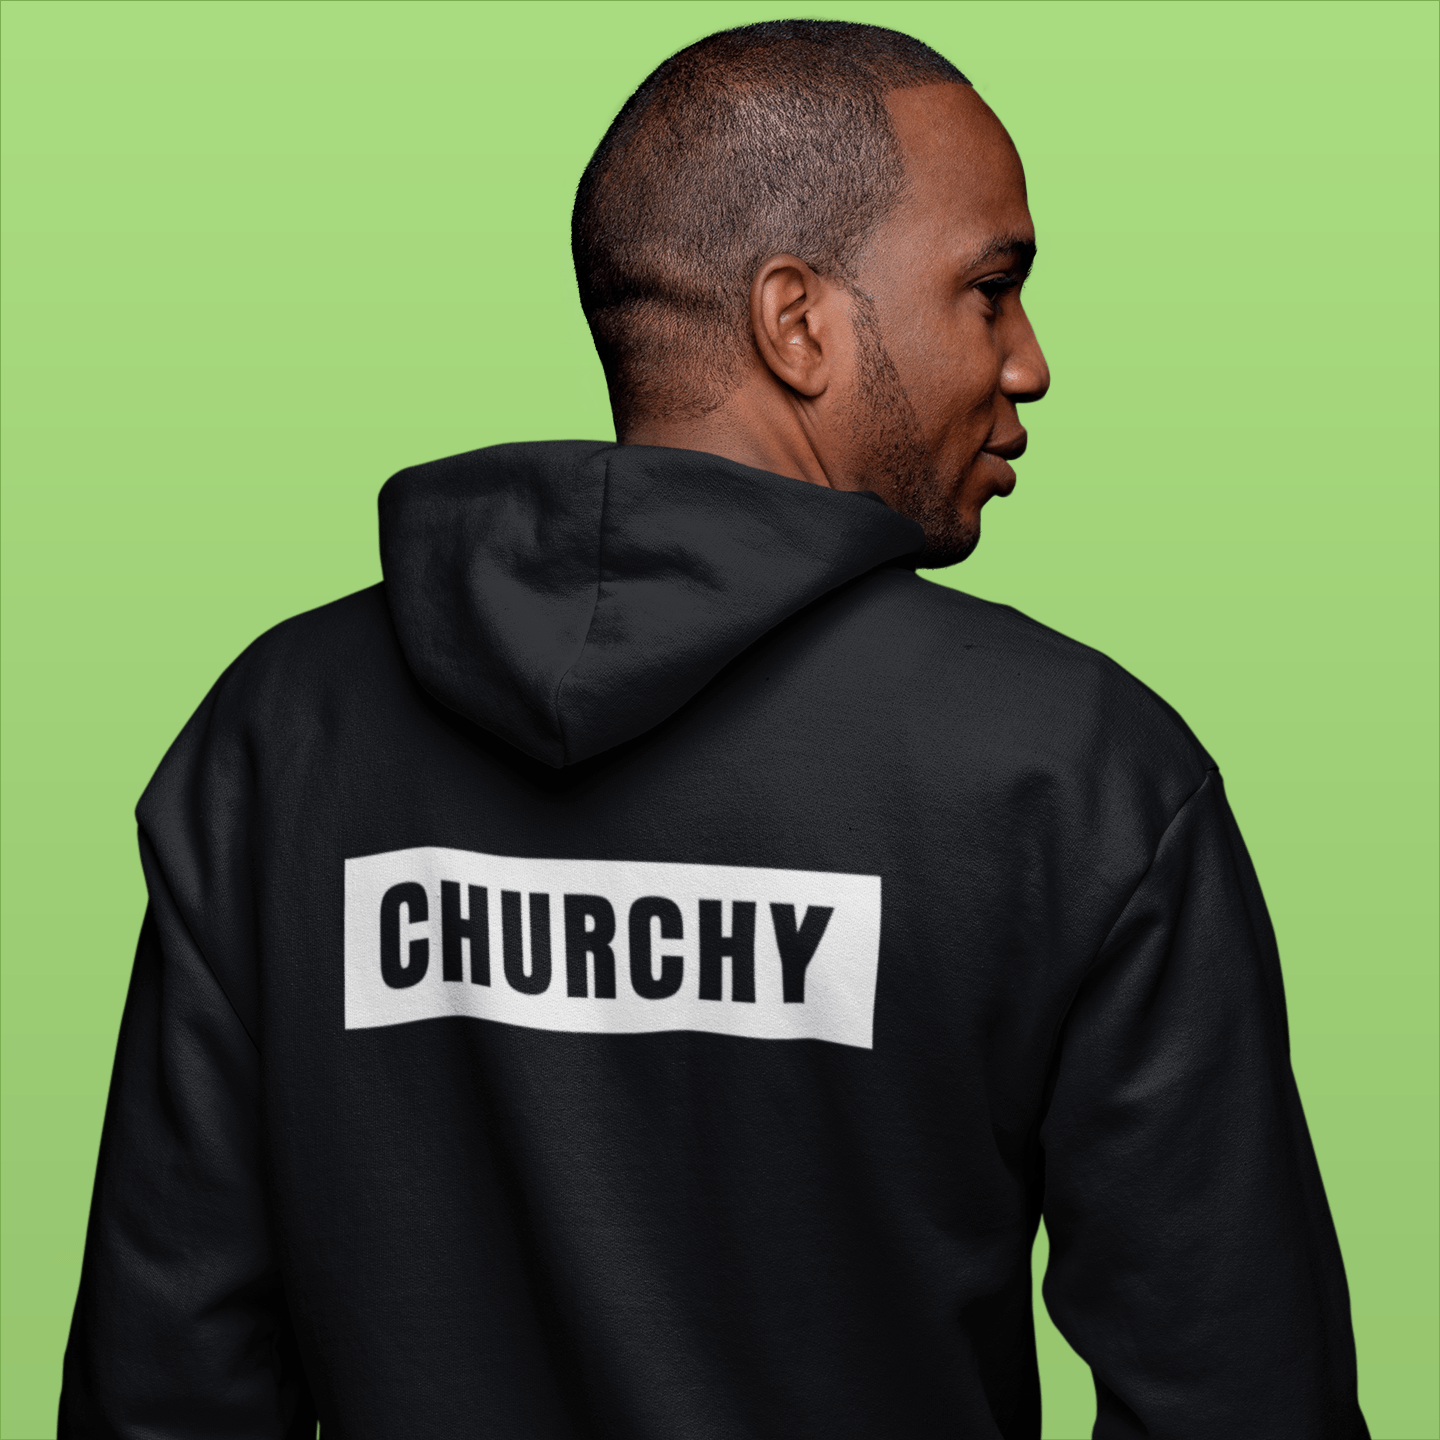 man-churchy-zipped-hoodie-back